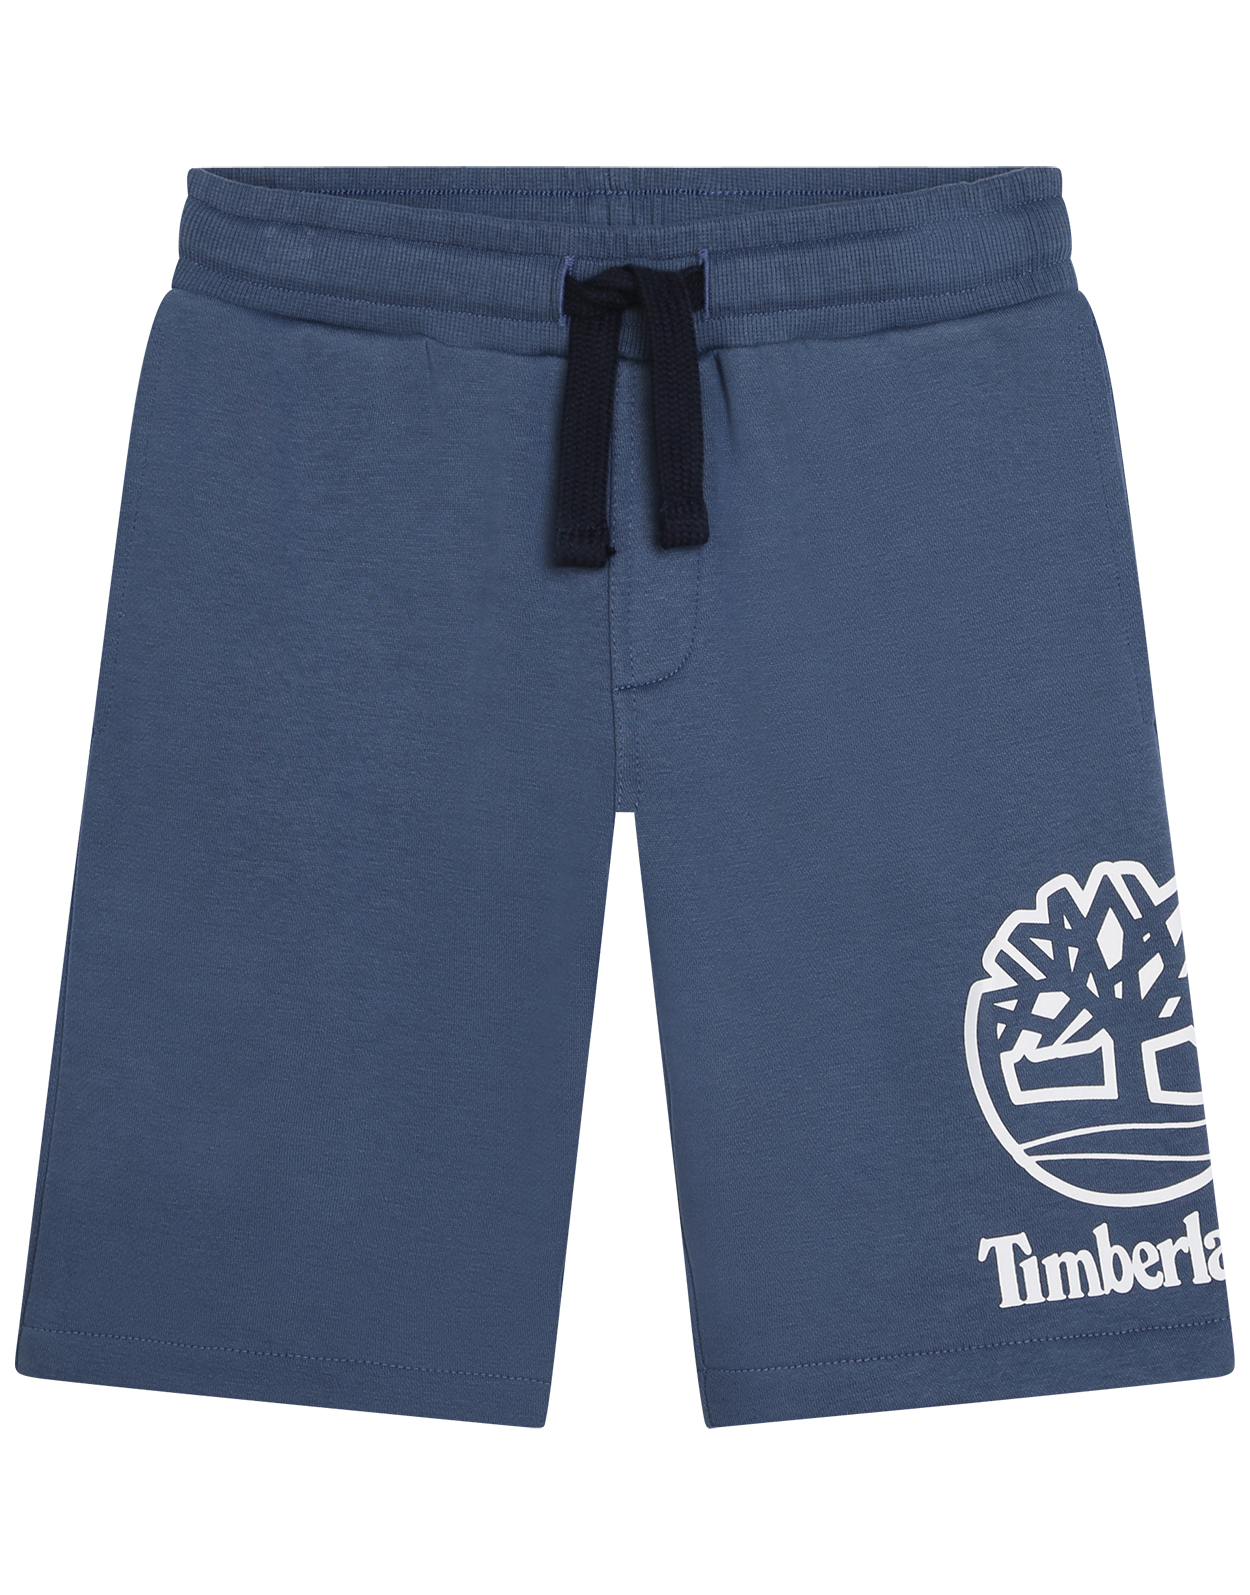 Short Junior Garçon Timberland coton indigo